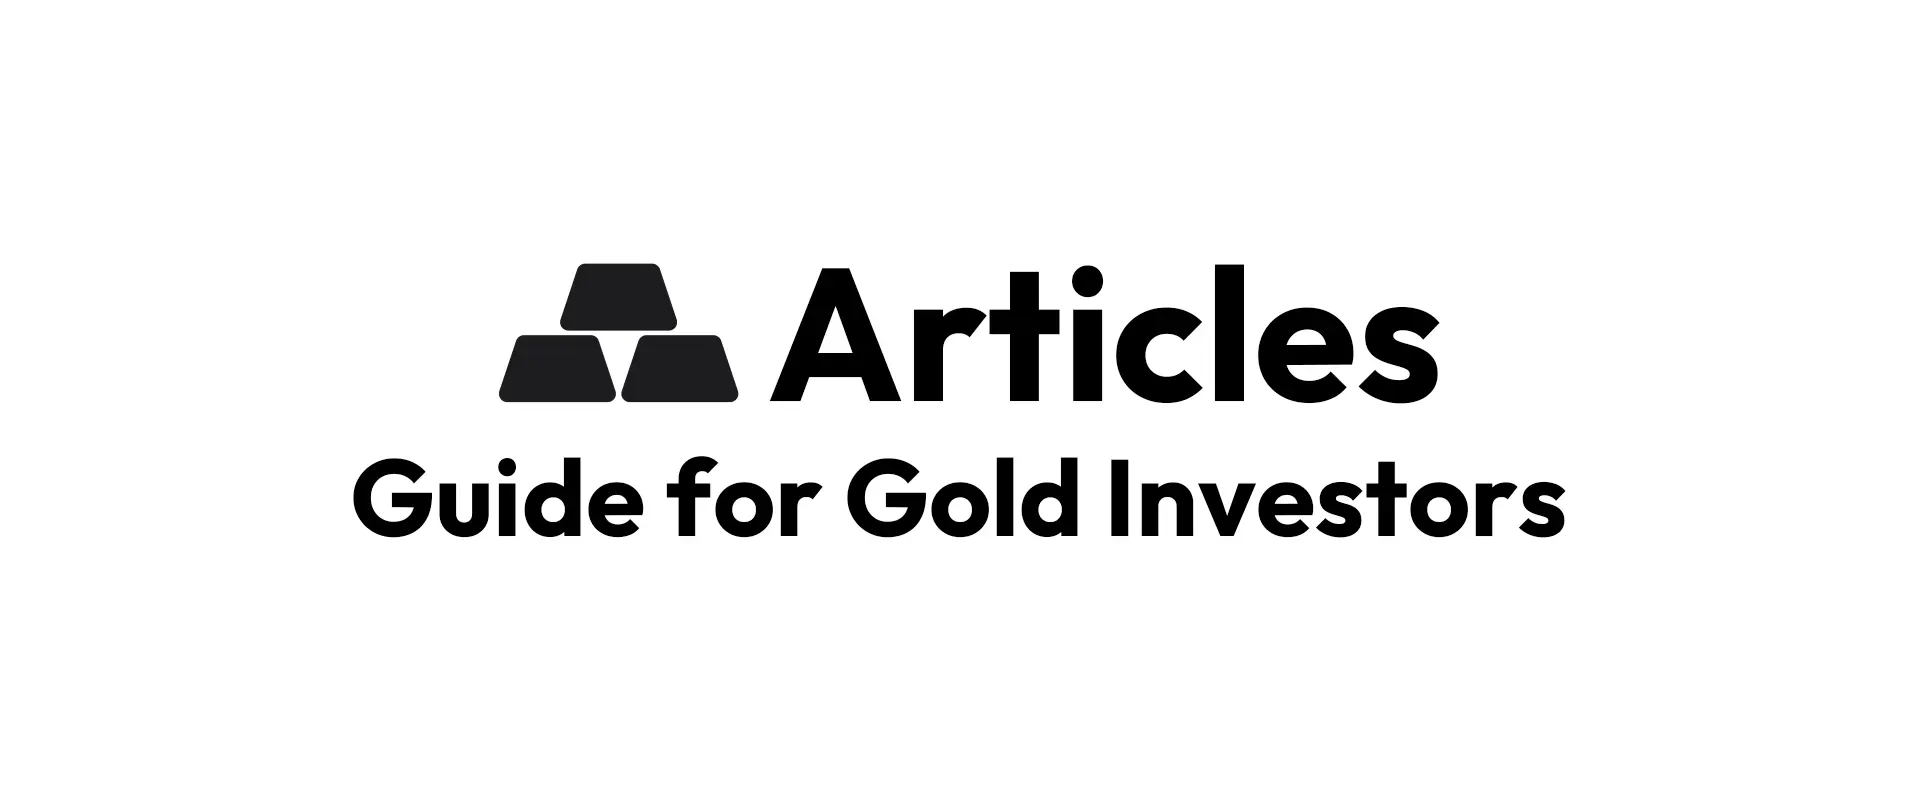 Guide for Gold Investors